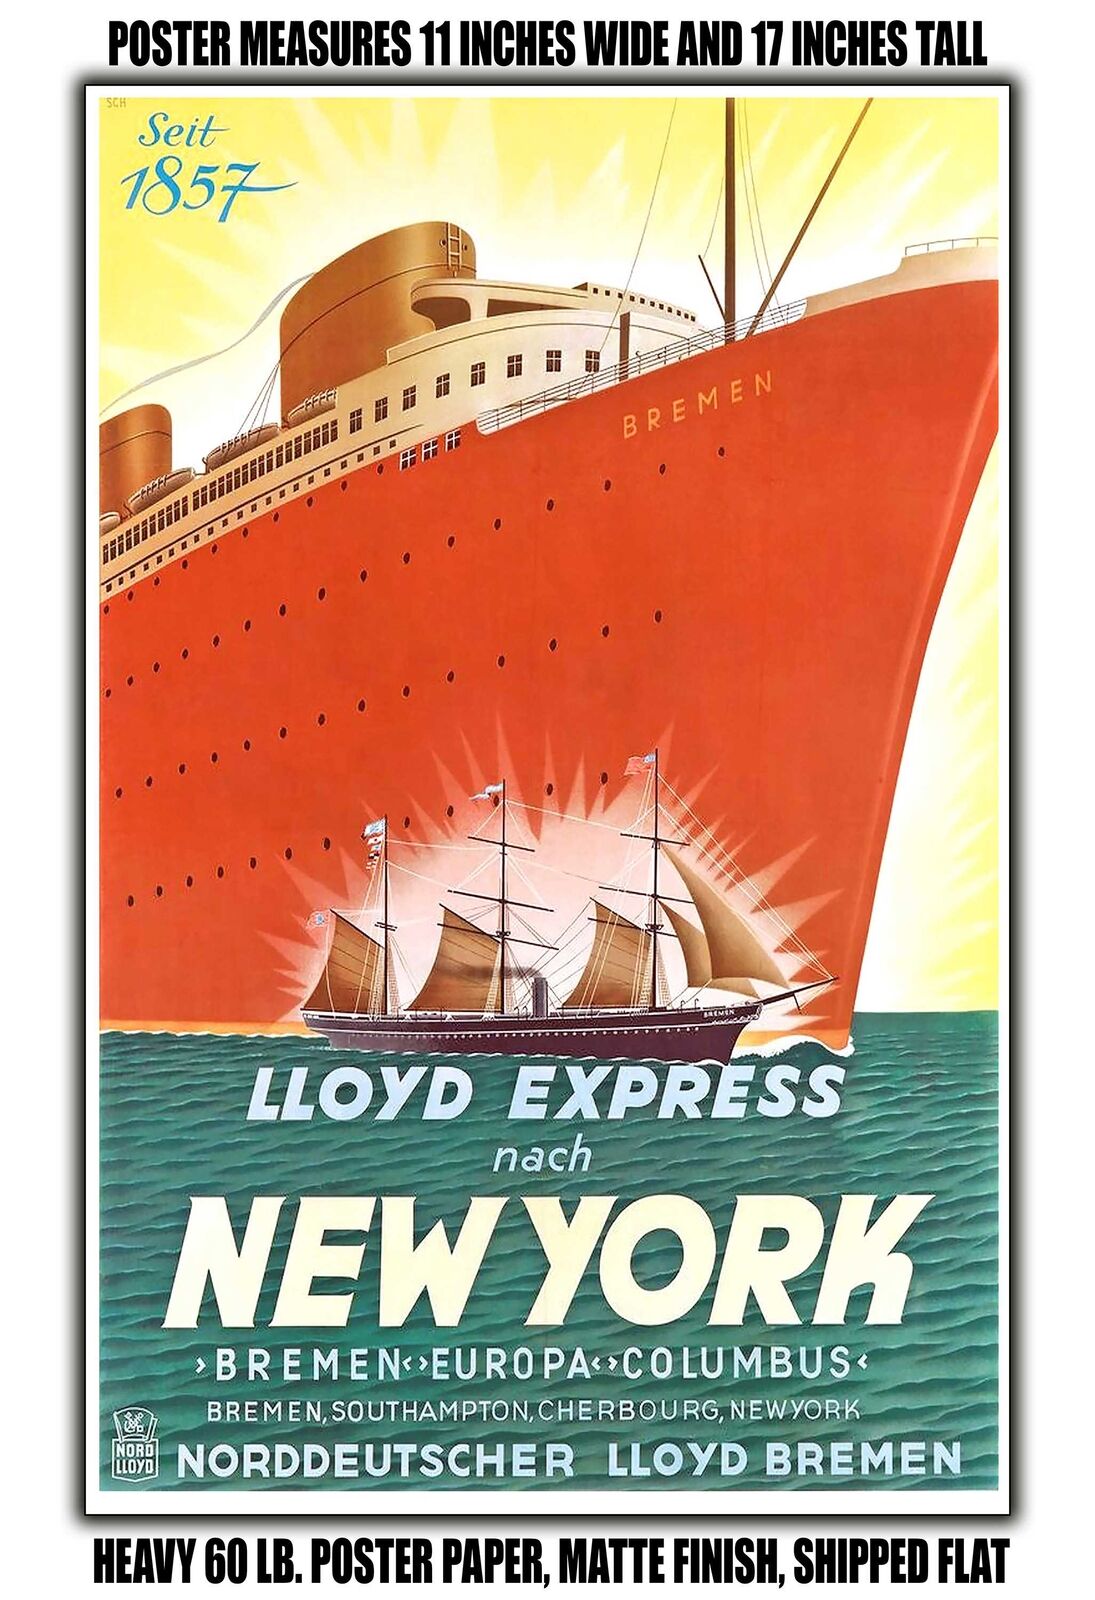 11x17 POSTER - 1937 Lloyd Express to New York Norddeutscher Lloyd Bremen